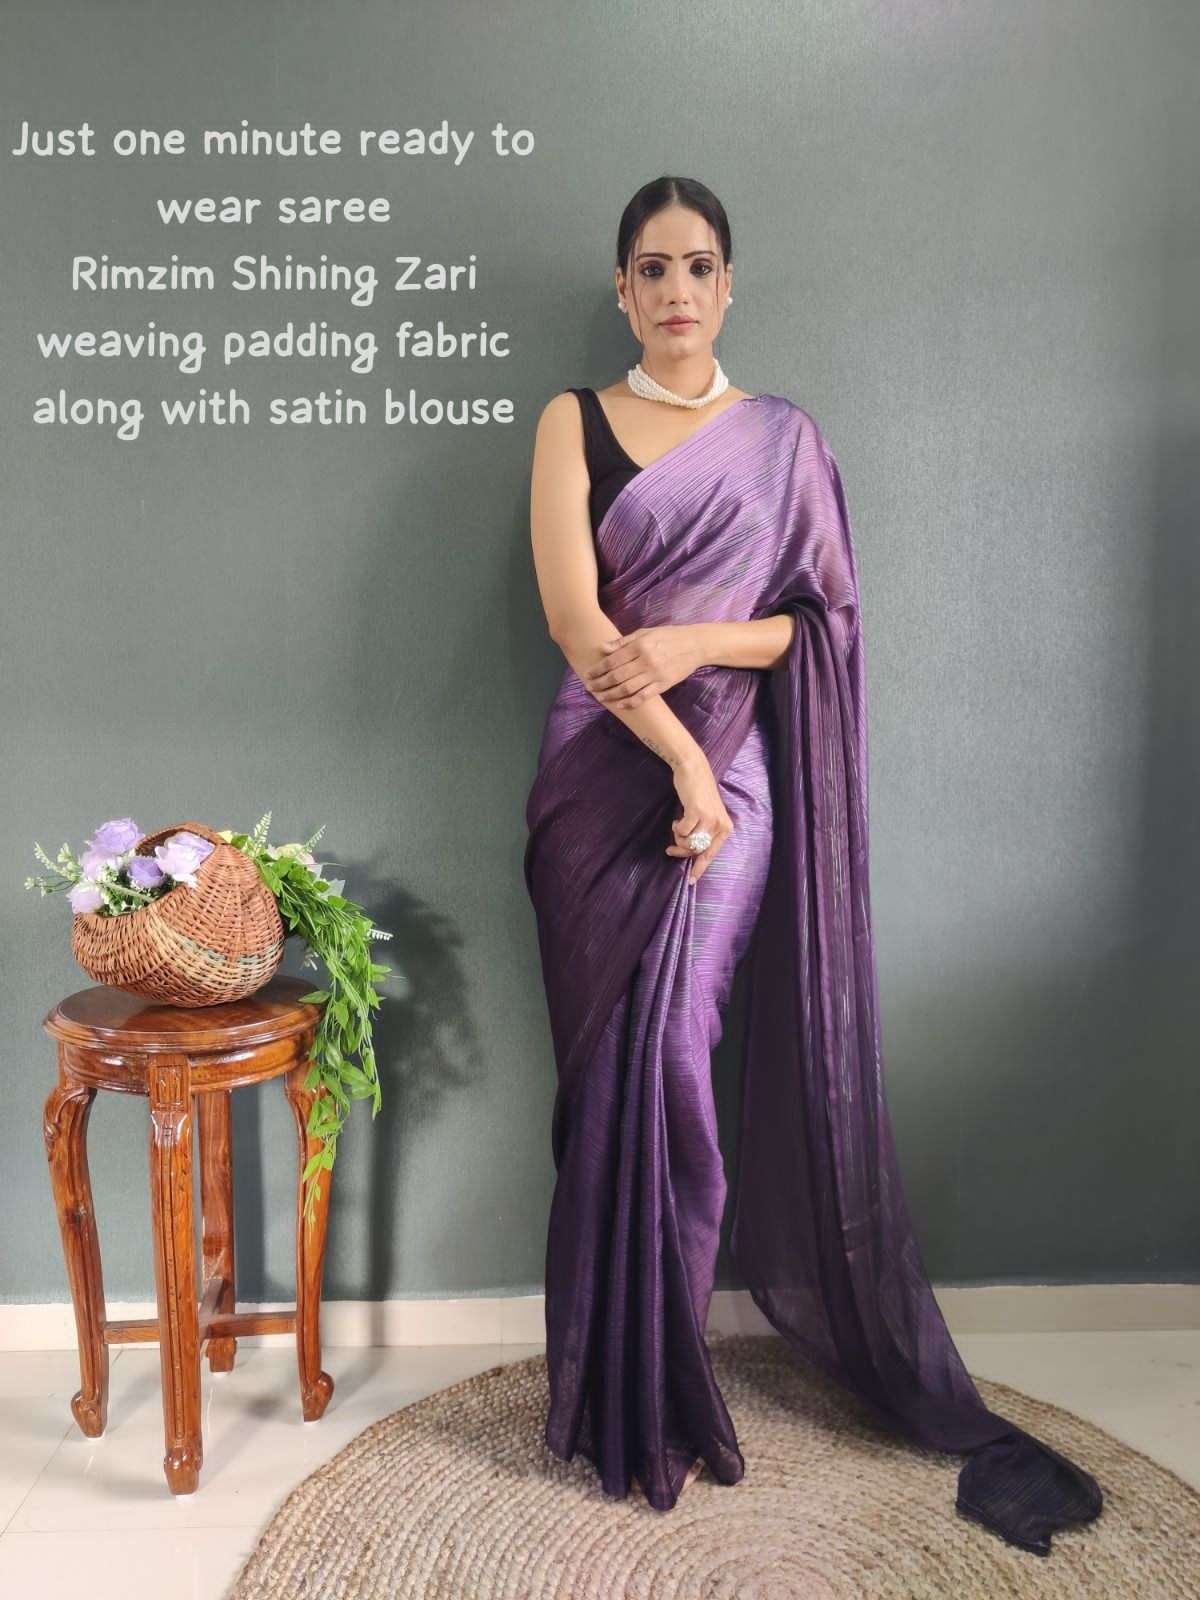 in just one minute ready to wear saree one minute fabric fancy chiffon rim zim soft zari weaving padding loving dark color ready to wear saree 2